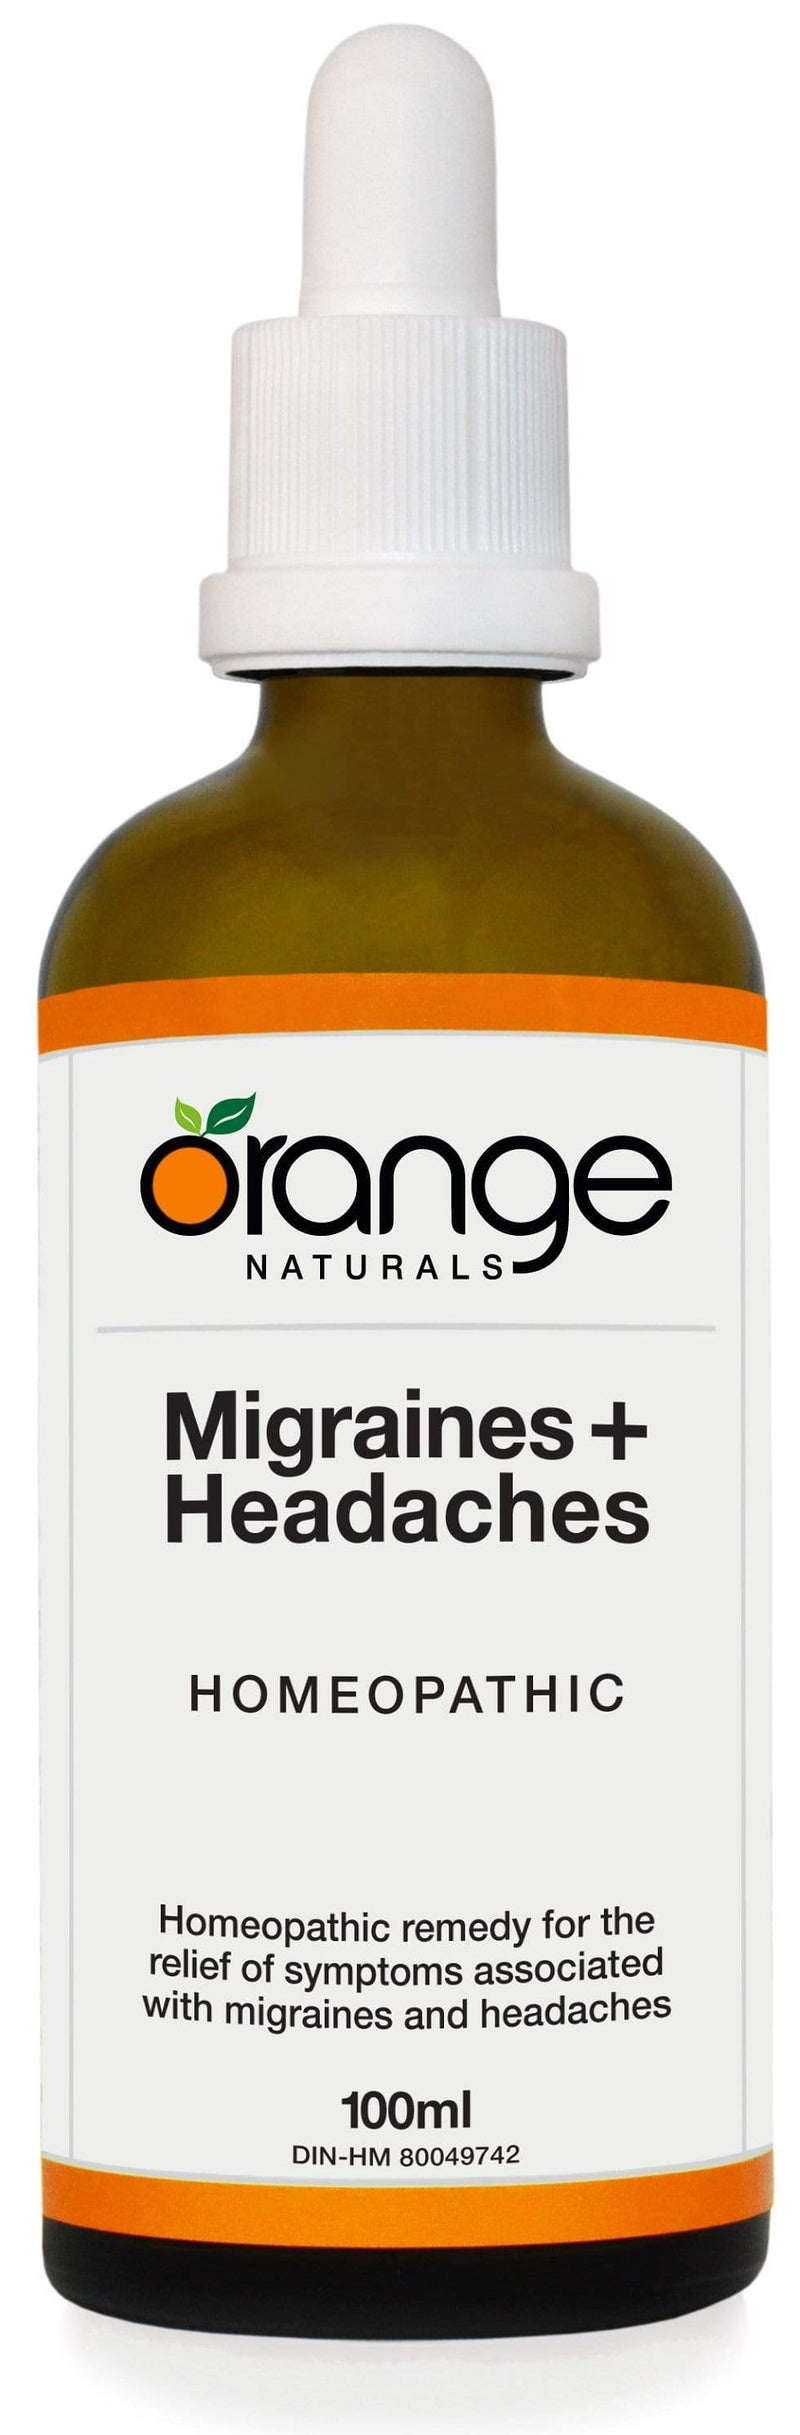 Orange Naturals Homeopathic Migraines + Headaches